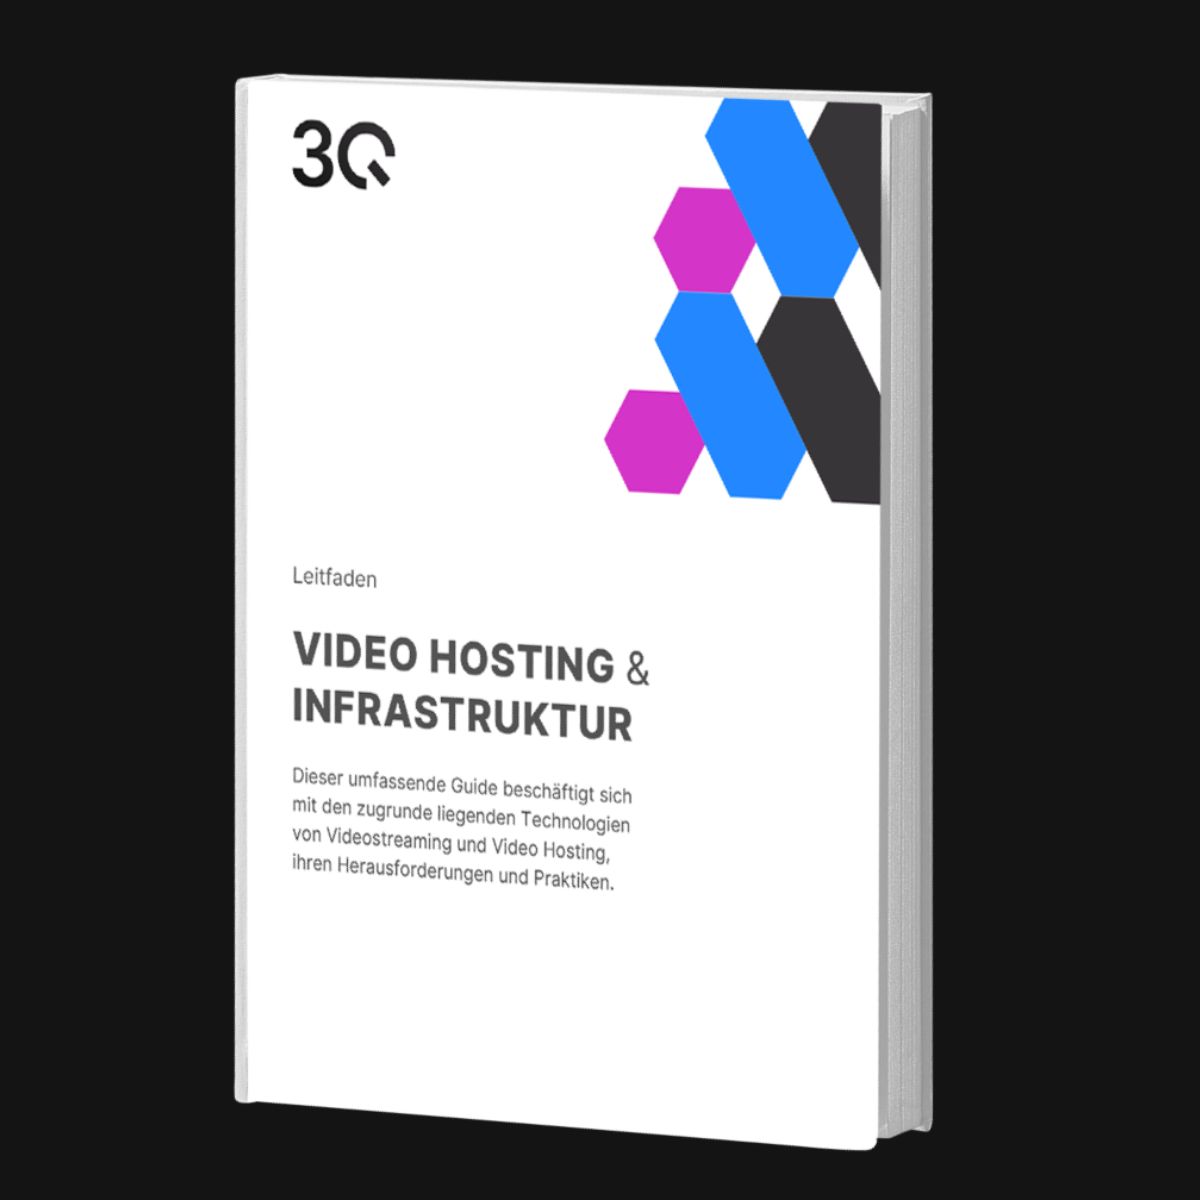 https://m.3q.video/de/video-hosting-guide